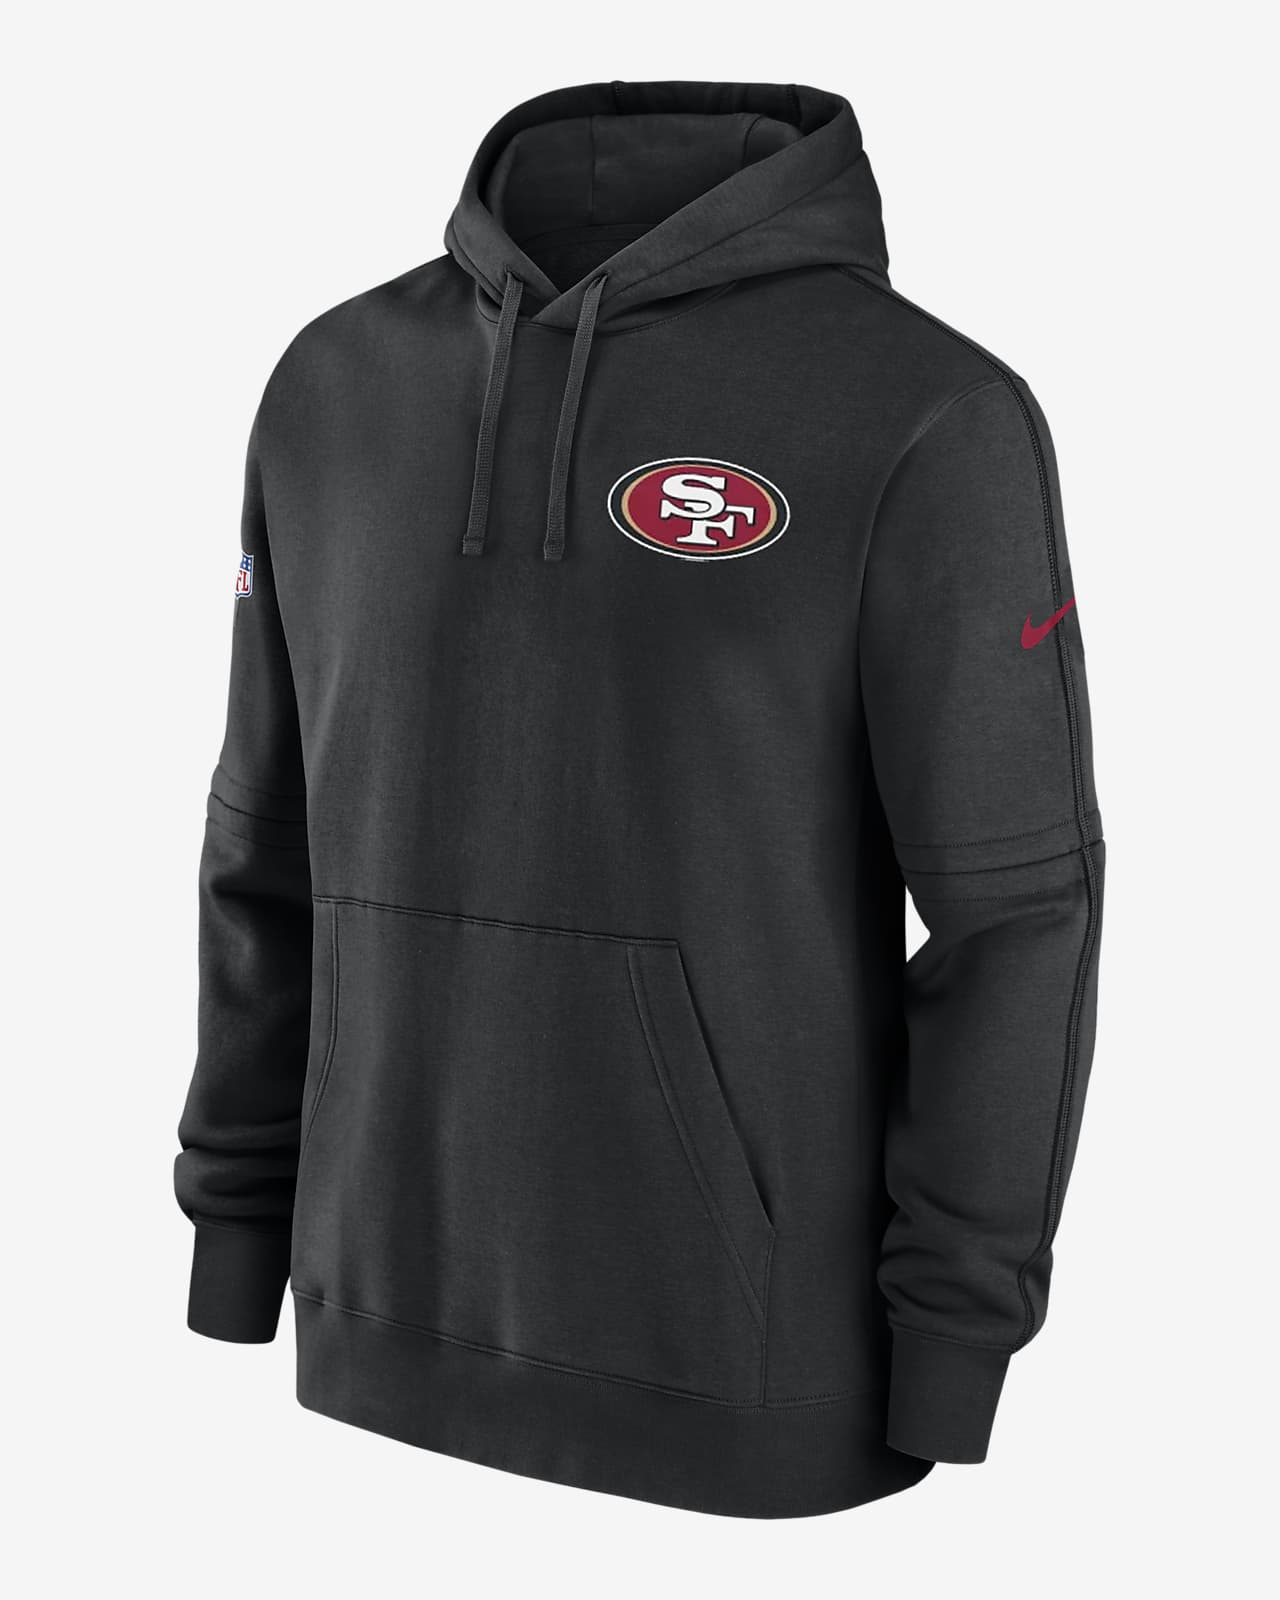 49ers coach hoodie